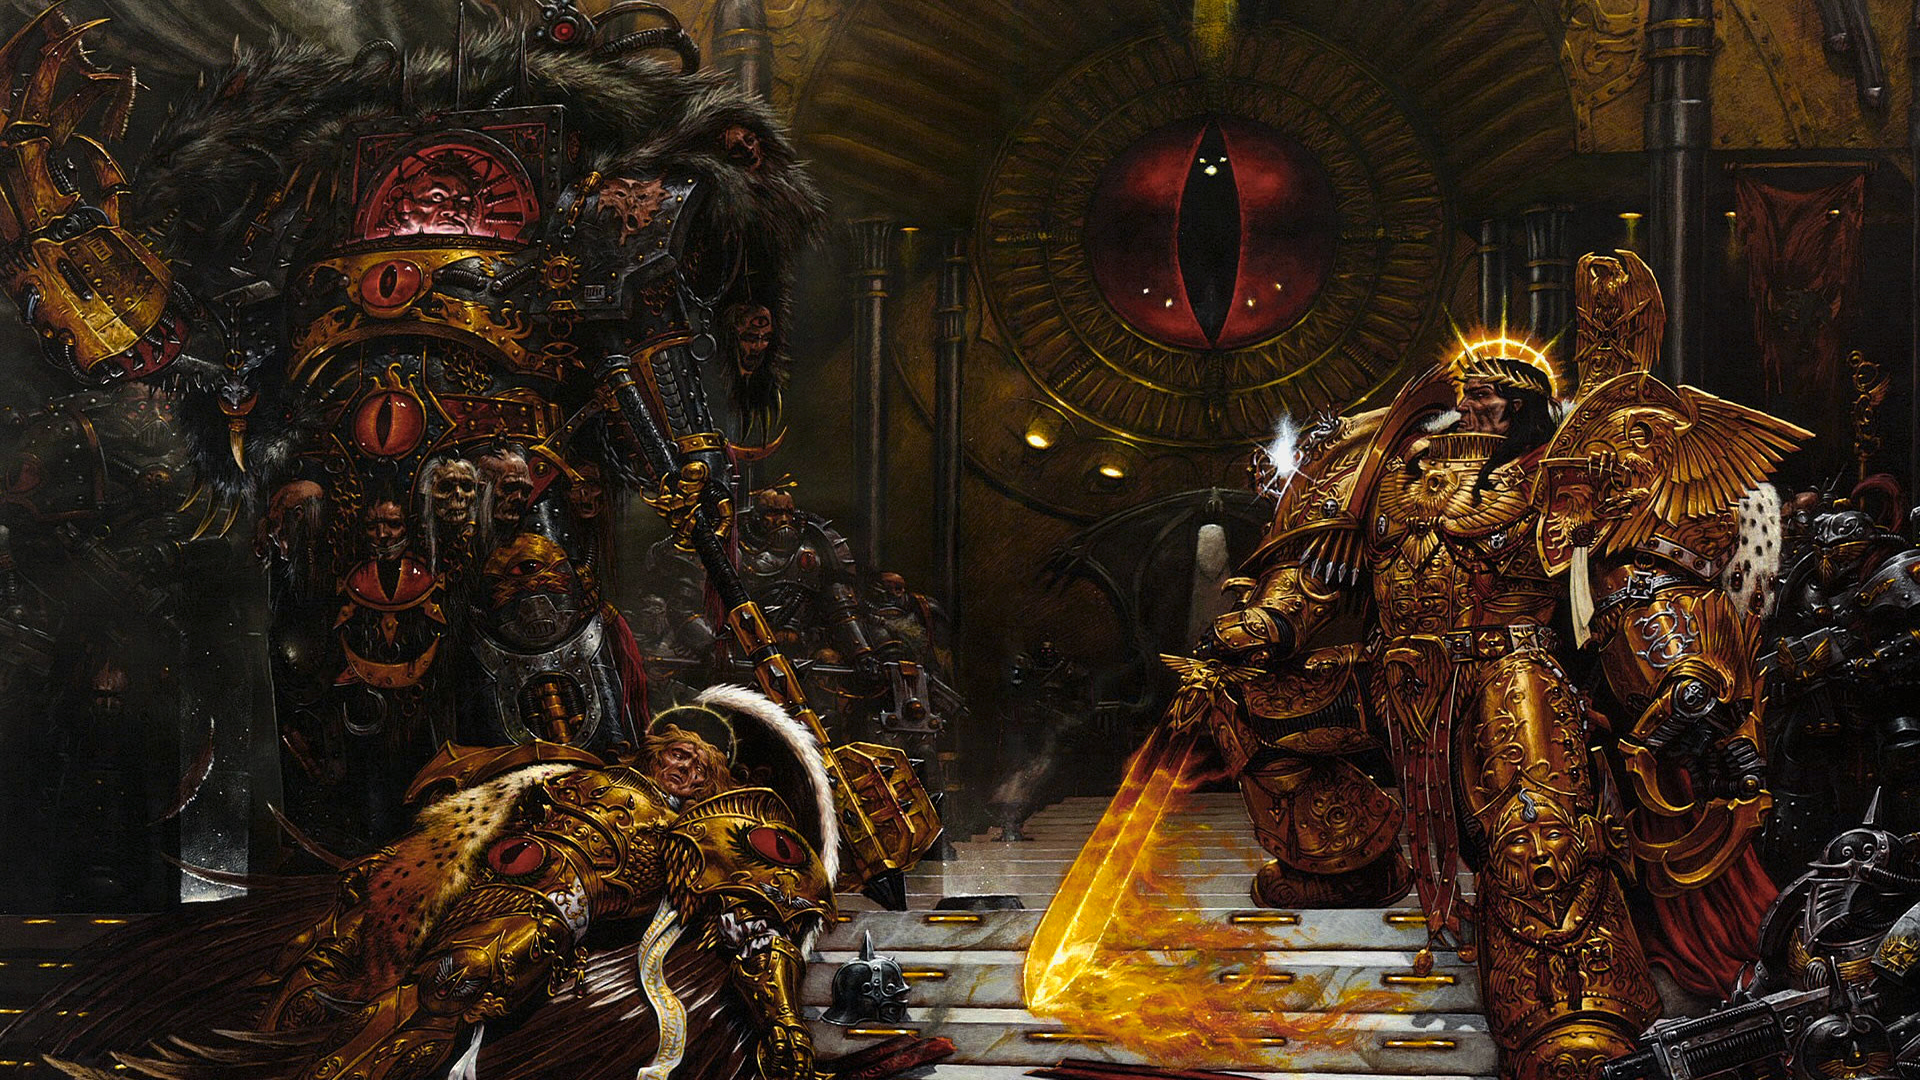 General 1920x1080 Warhammer 40,000 Horus Heresy Warhammer Emperor of Mankind artwork armor futuristic armor sword weapon fantasy art